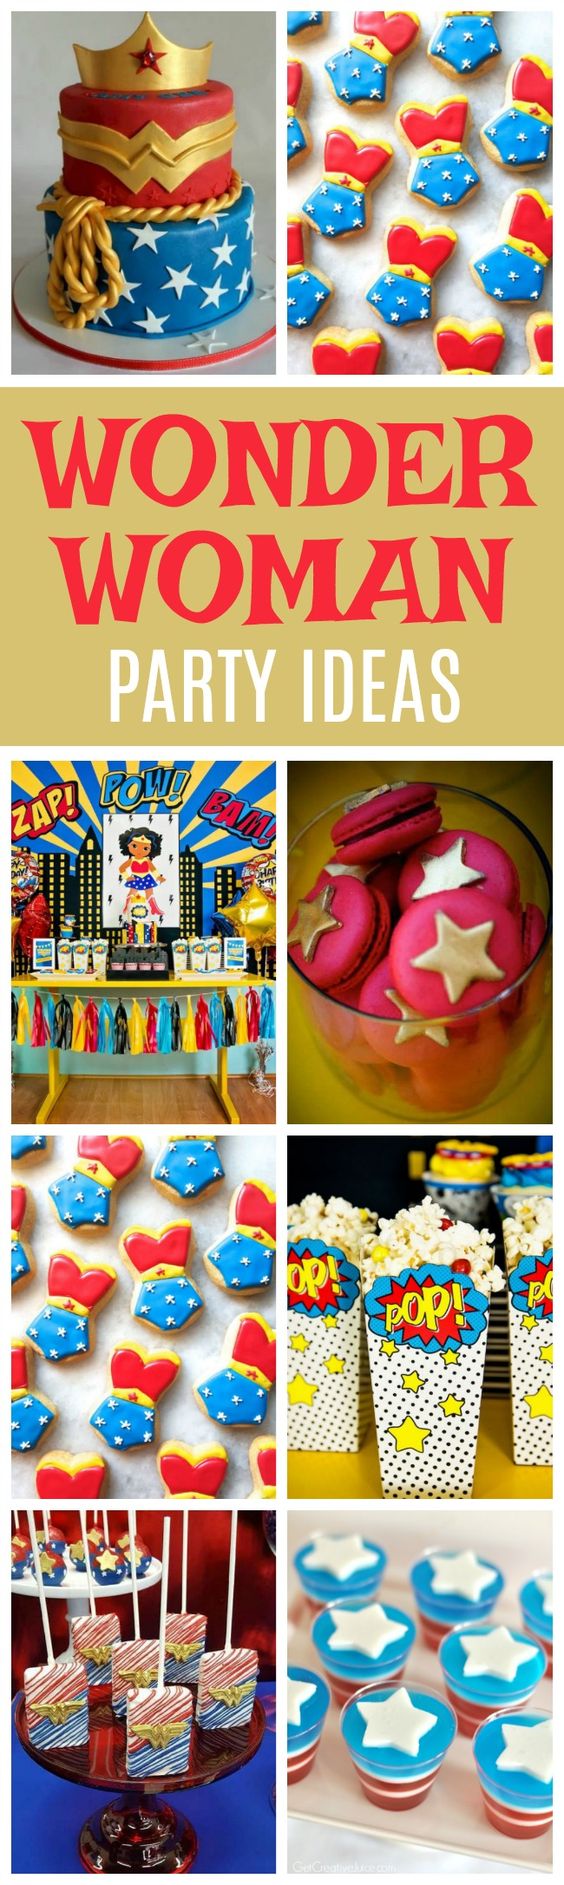 19 Wonder Woman Birthday Party Ideas - Pretty My Party